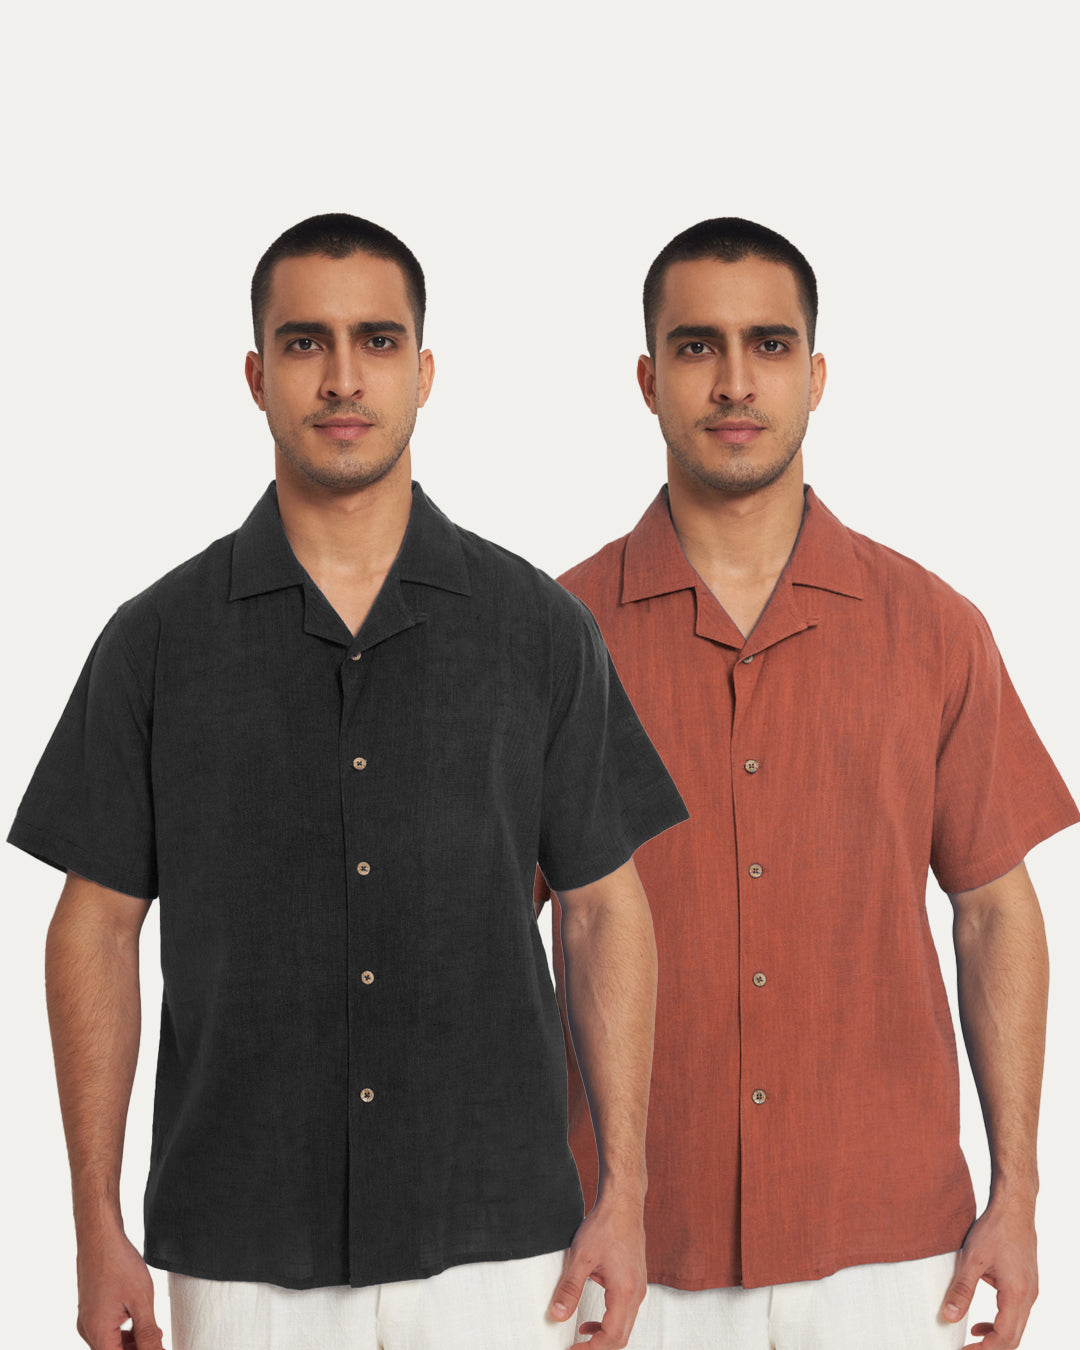 Combo : Classic Blush & Black Men's Half Sleeves Shirt